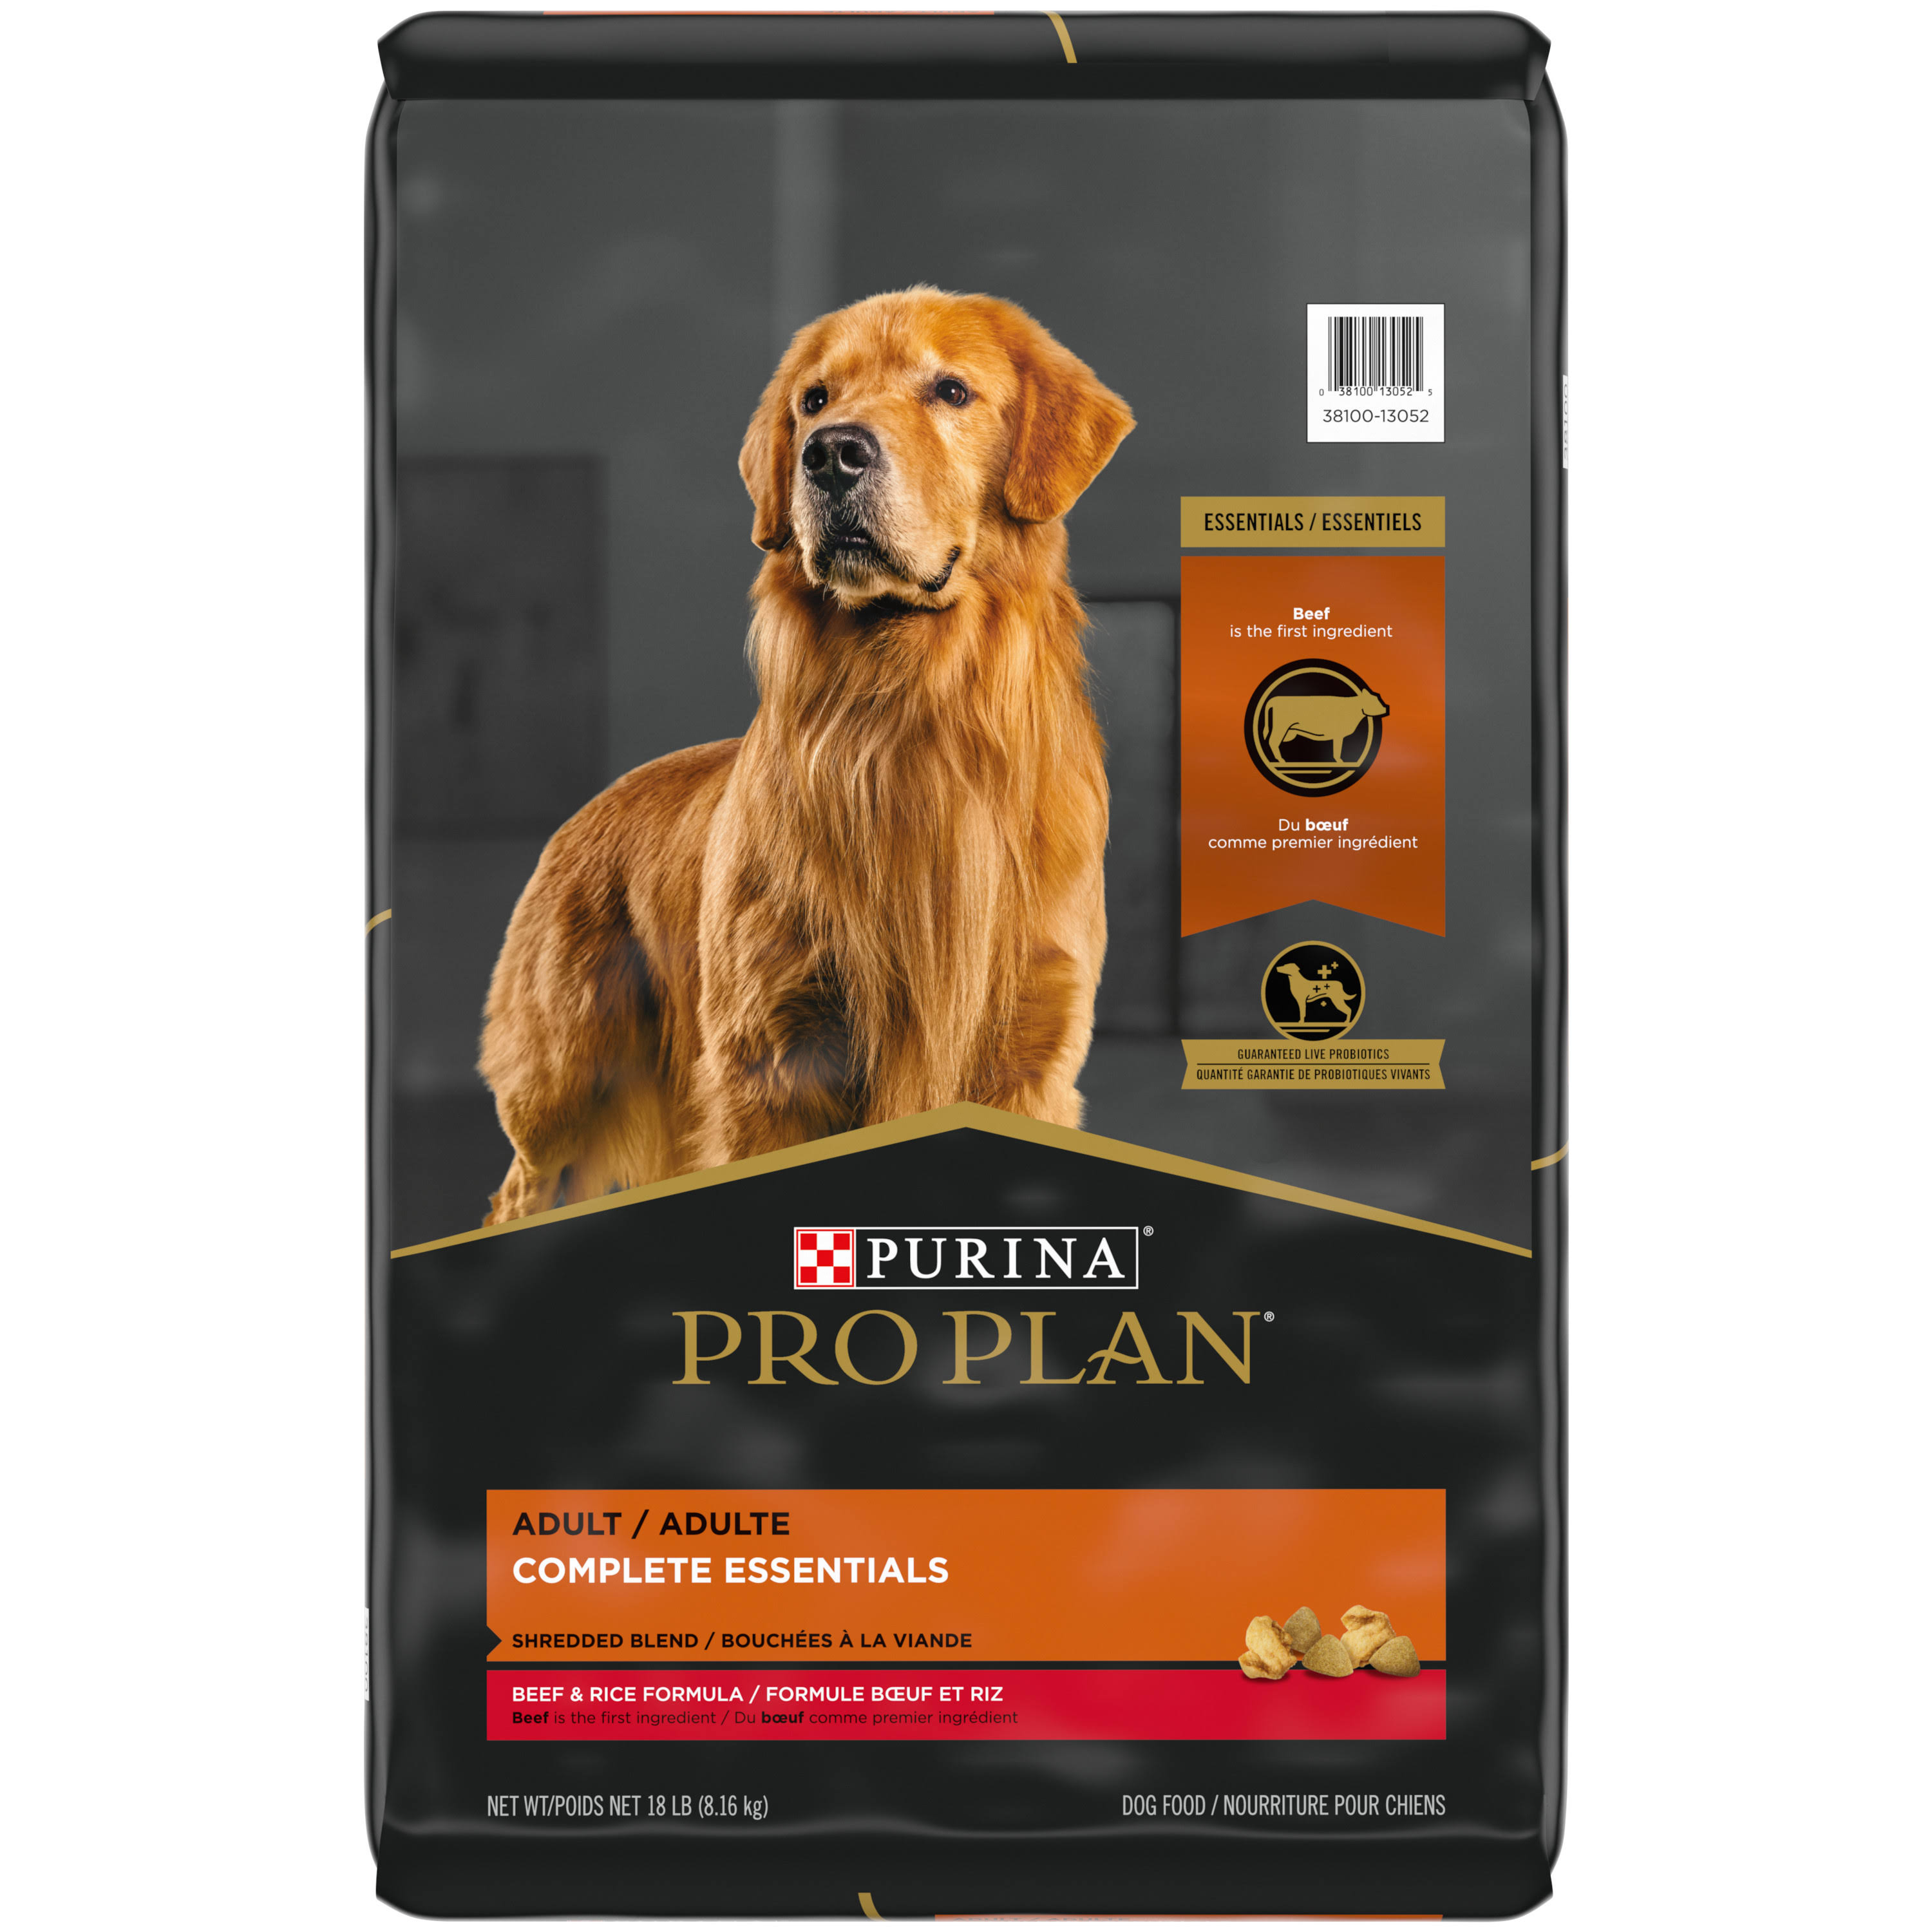 Purina Pro Plan Savor Dry Dog Food - Shredded Blend Beef And Rice Formula